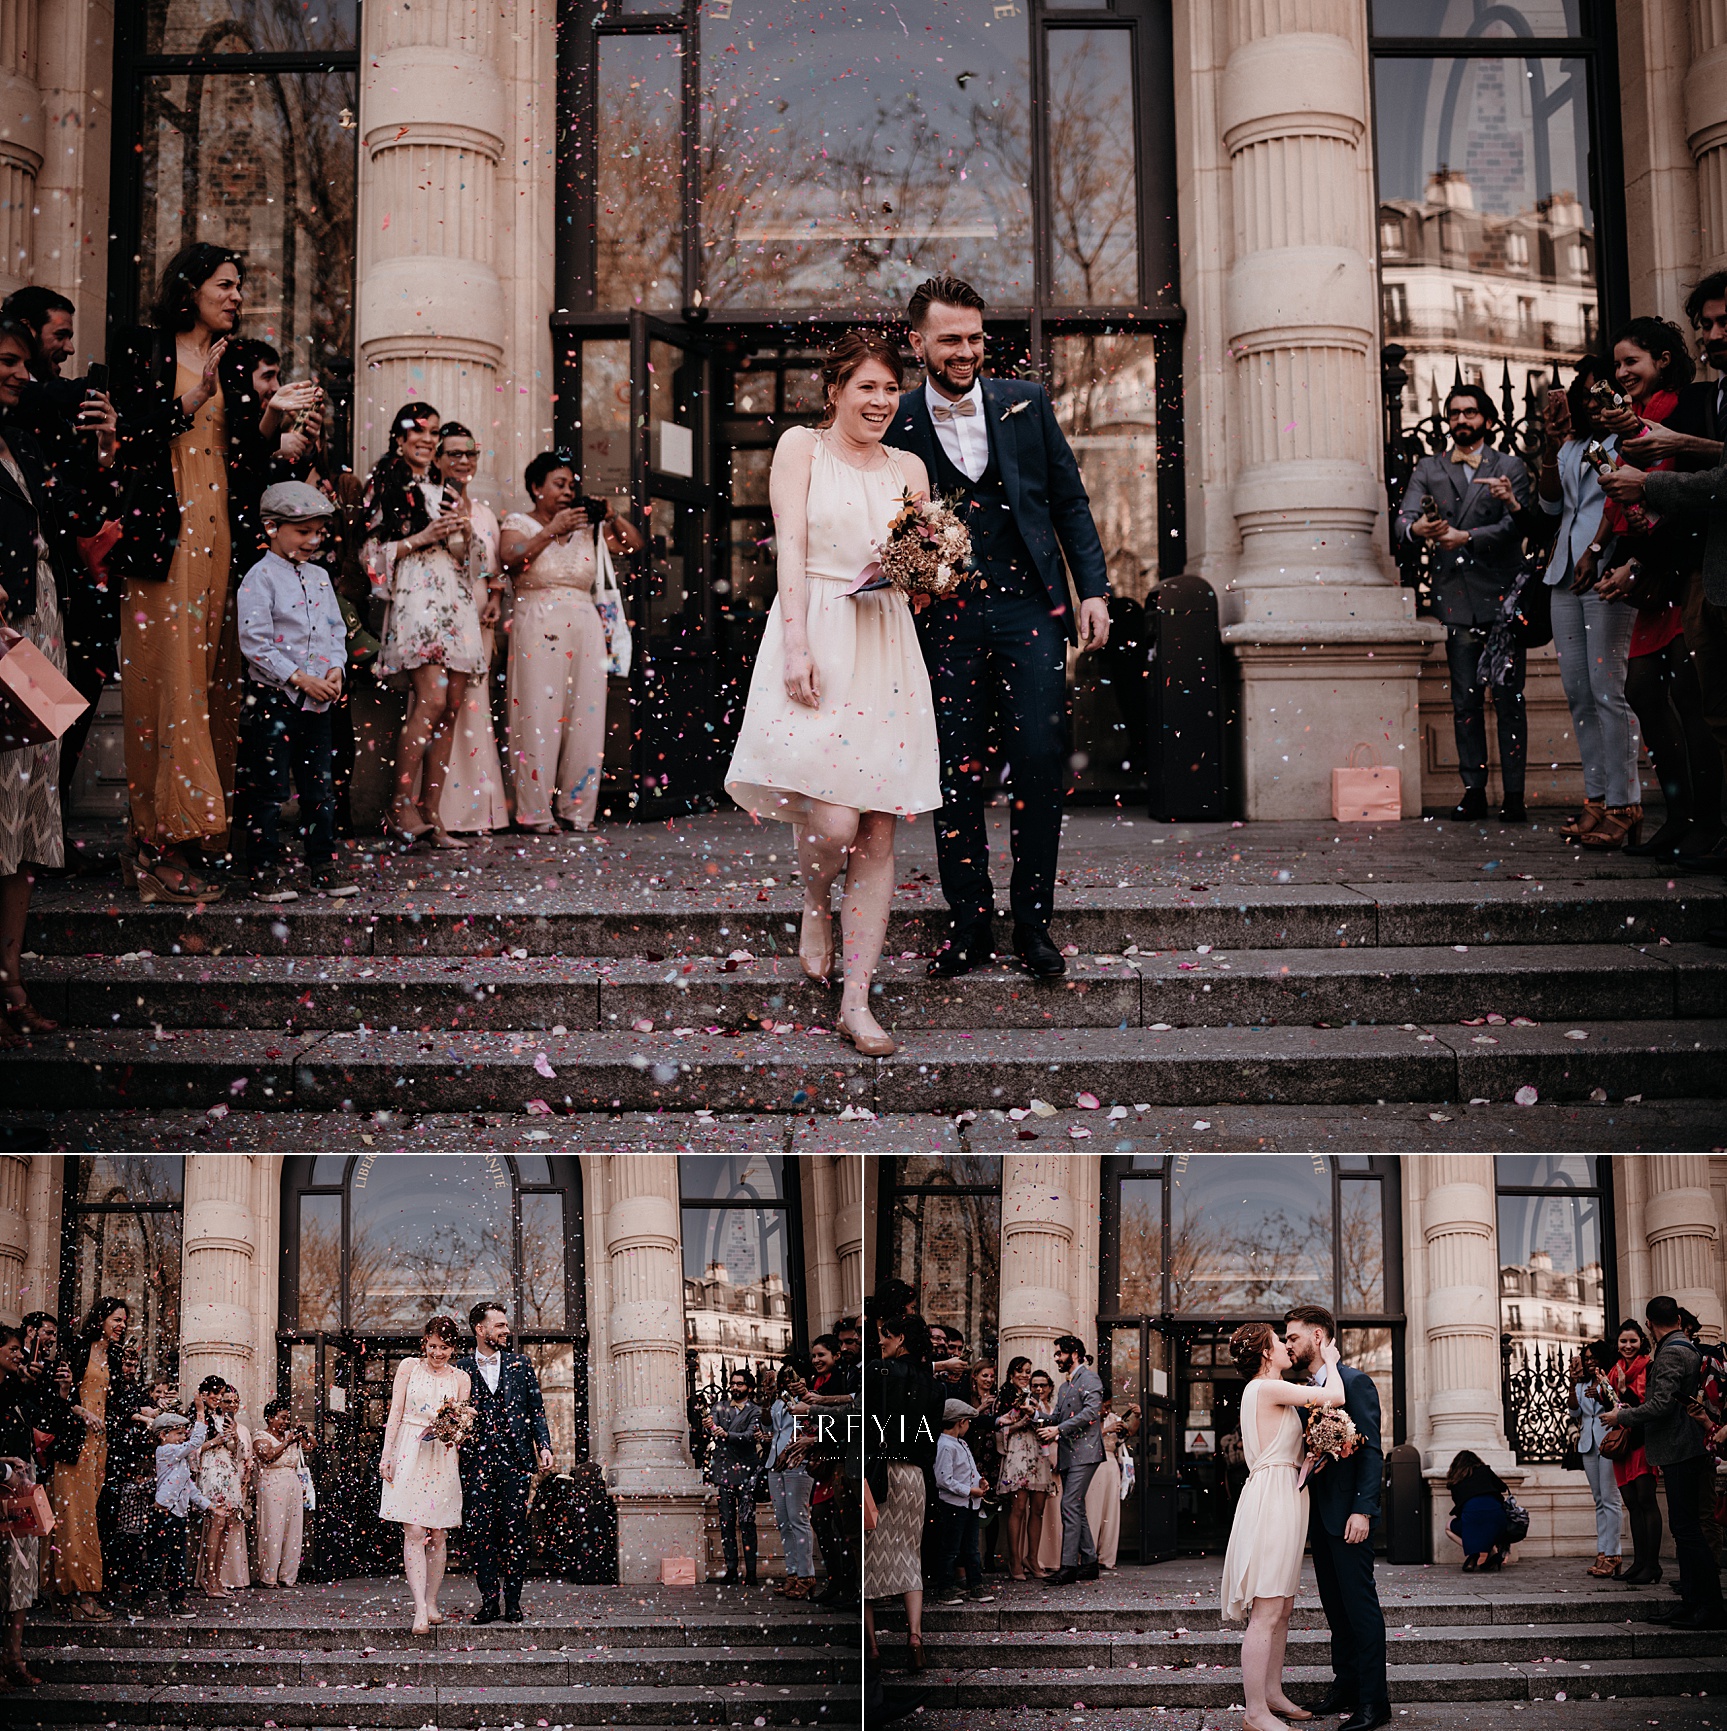 P + F |  mariage reportage alternatif moody intime vintage naturel boho boheme |  PHOTOGRAPHE mariage PARIS france destination  | FREYIA photography_-121.jpg (Copy)